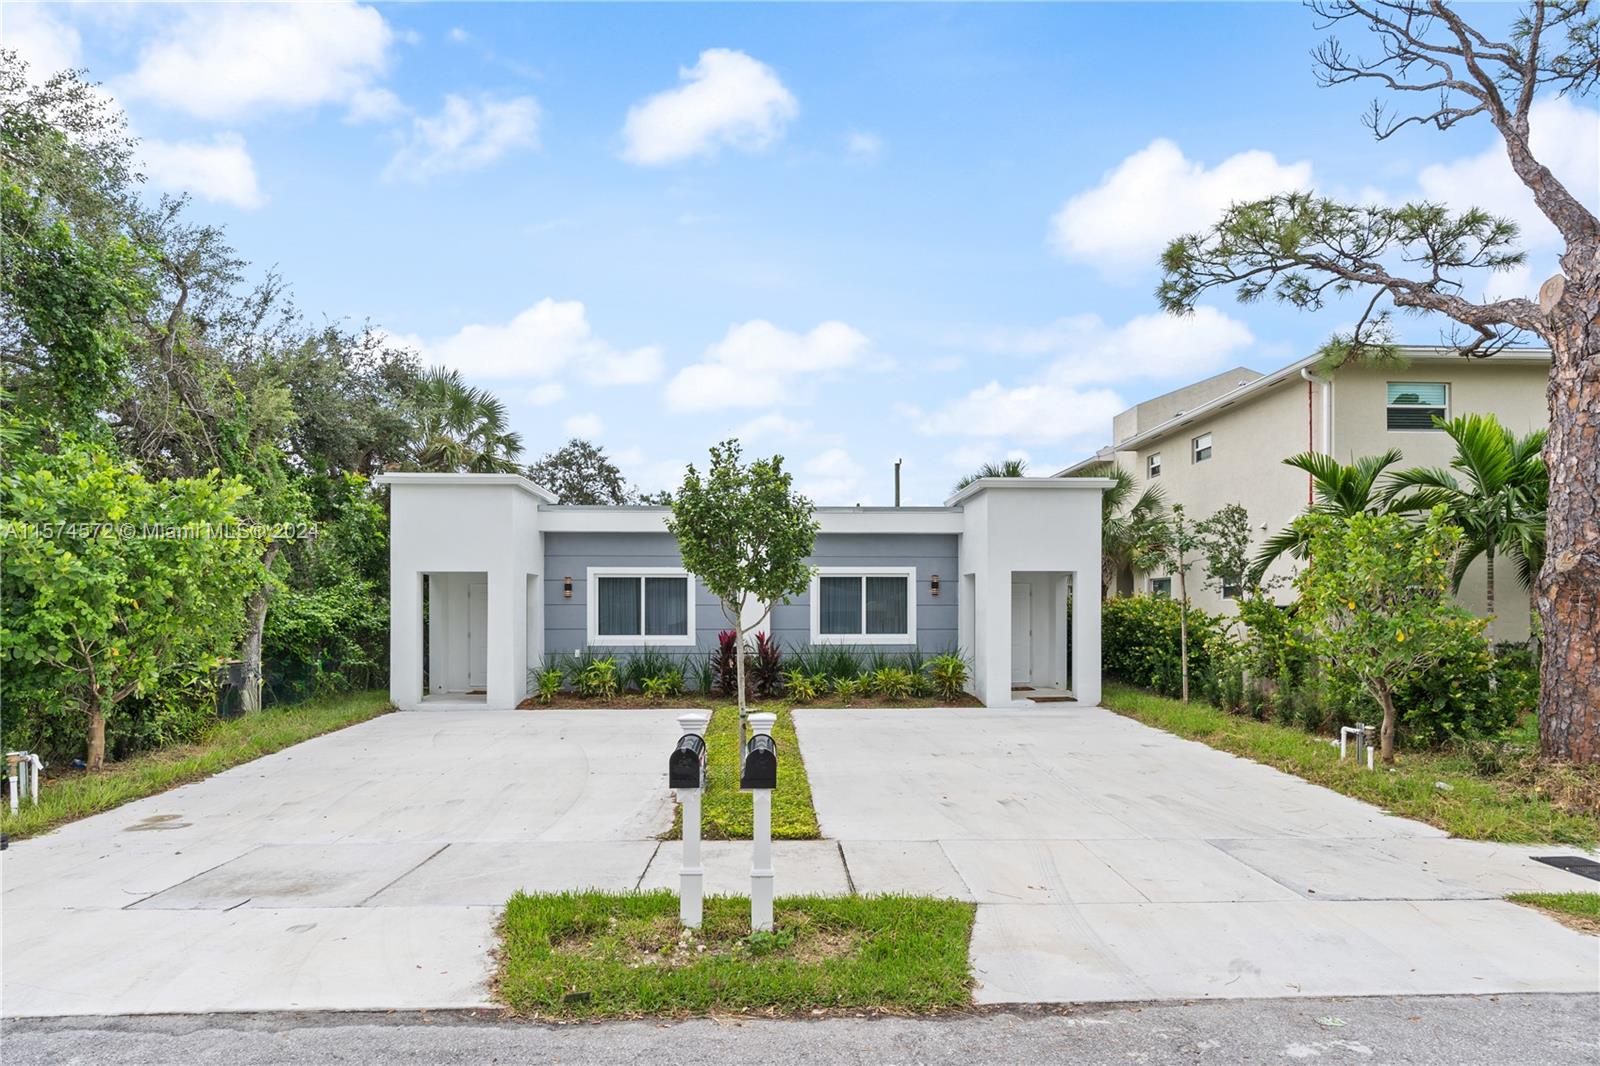 Rental Property at 817 Nw 7th Ave, Hallandale Beach, Broward County, Florida -  - $1,100,000 MO.